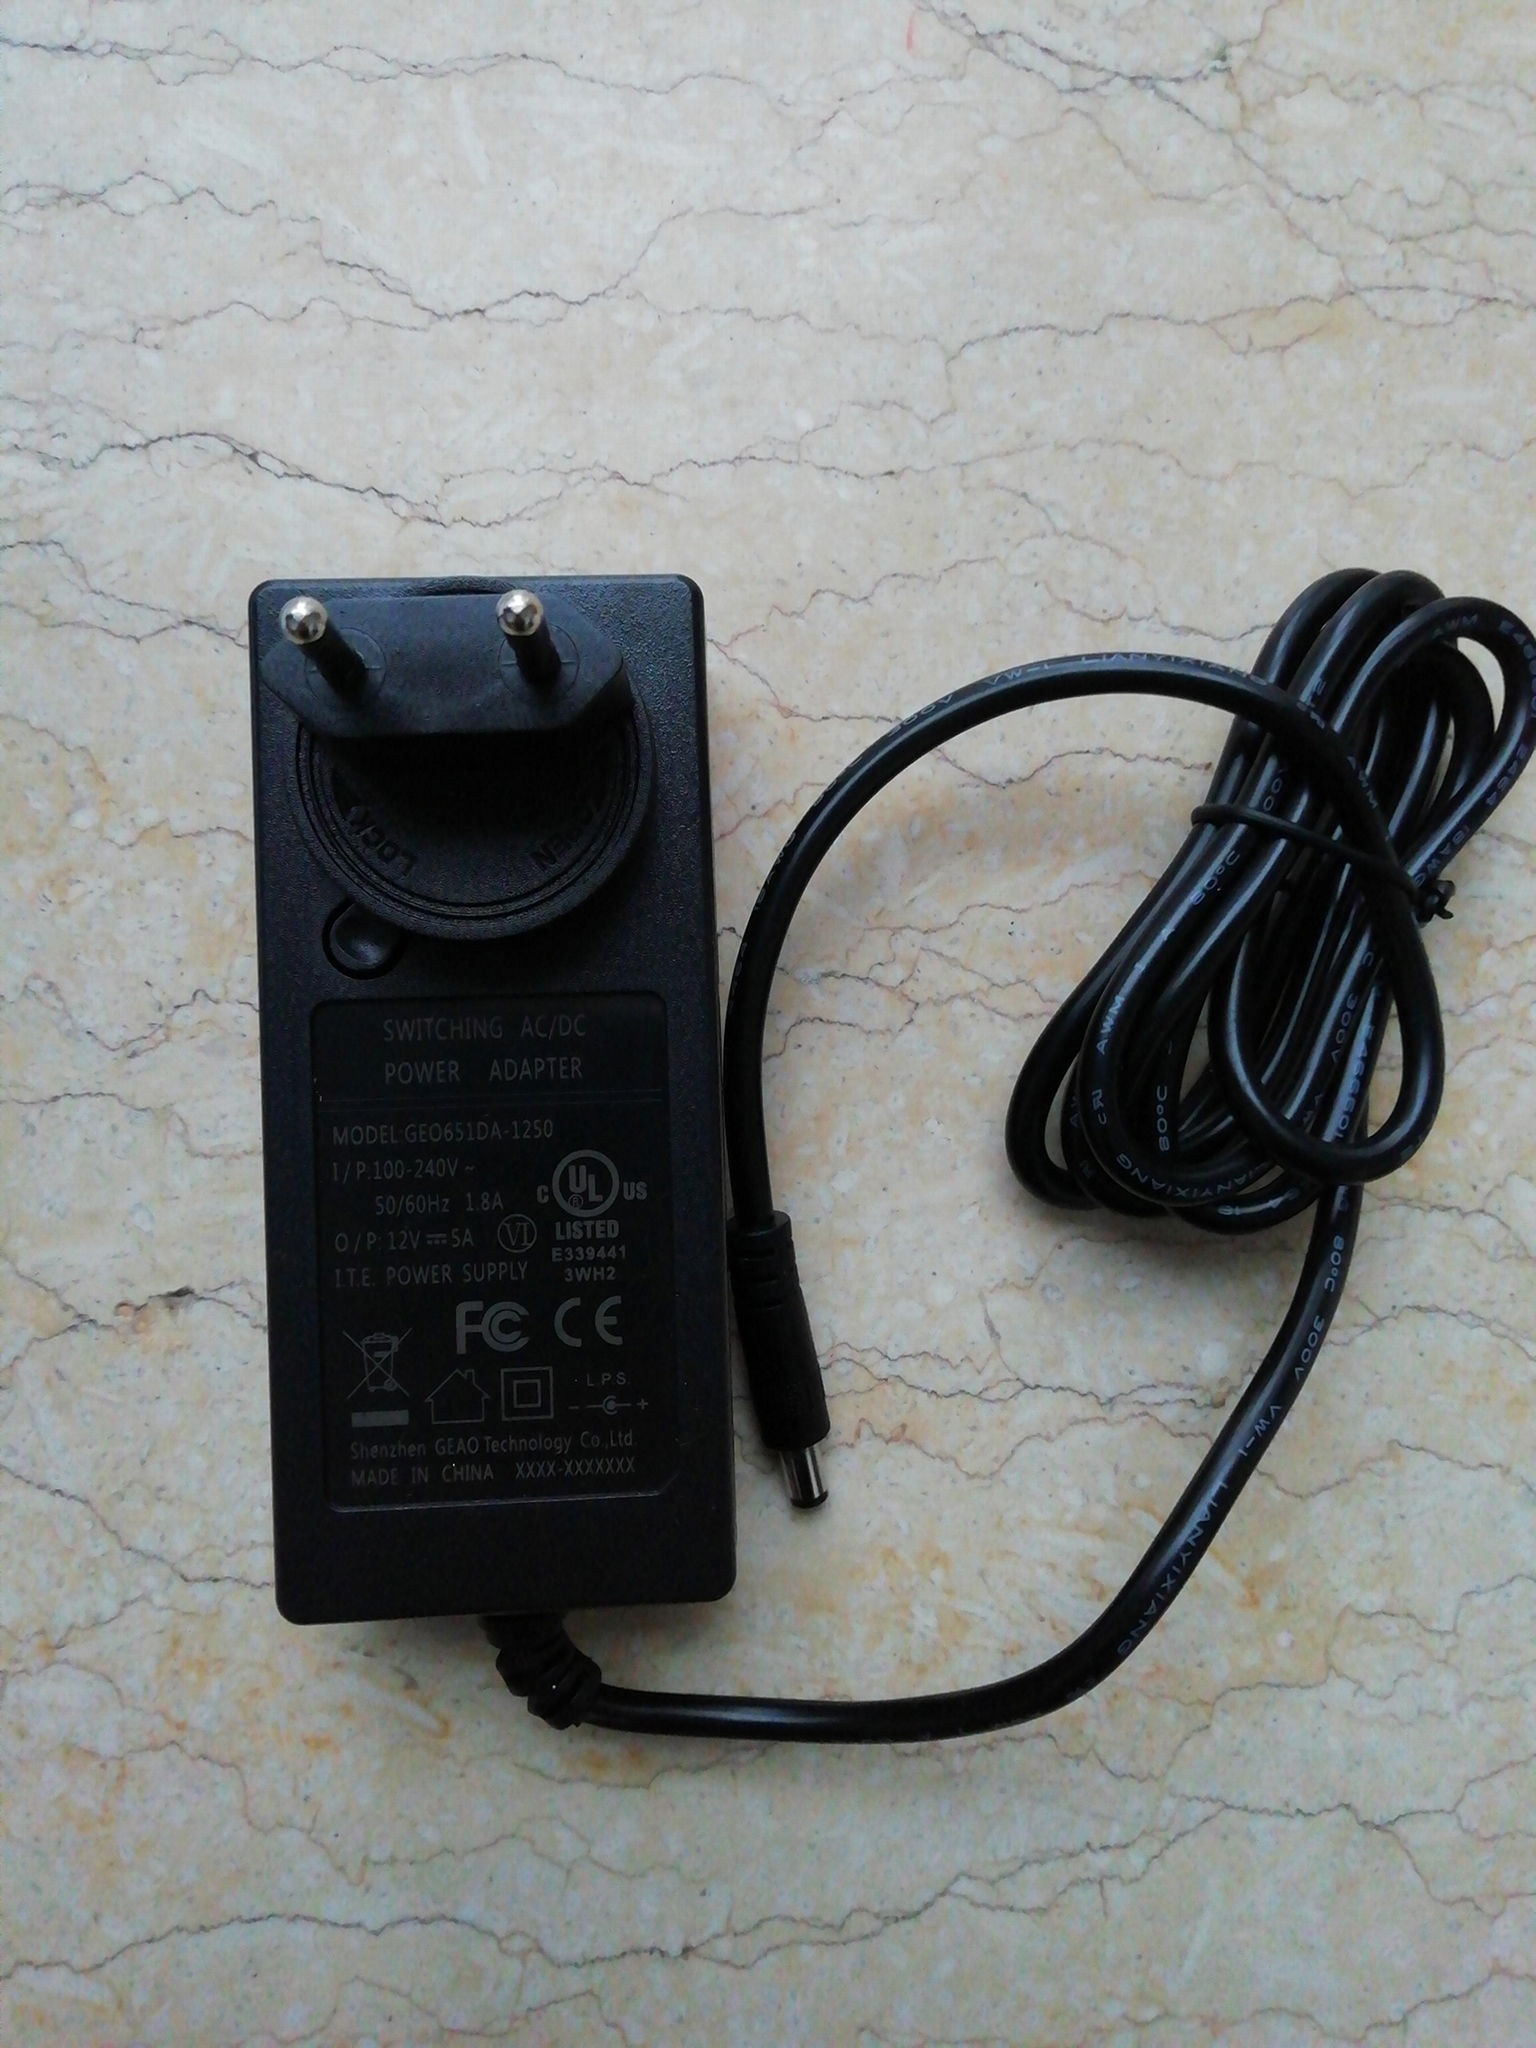 12V5A US wall mount power adapter GEO651DA-1250 2